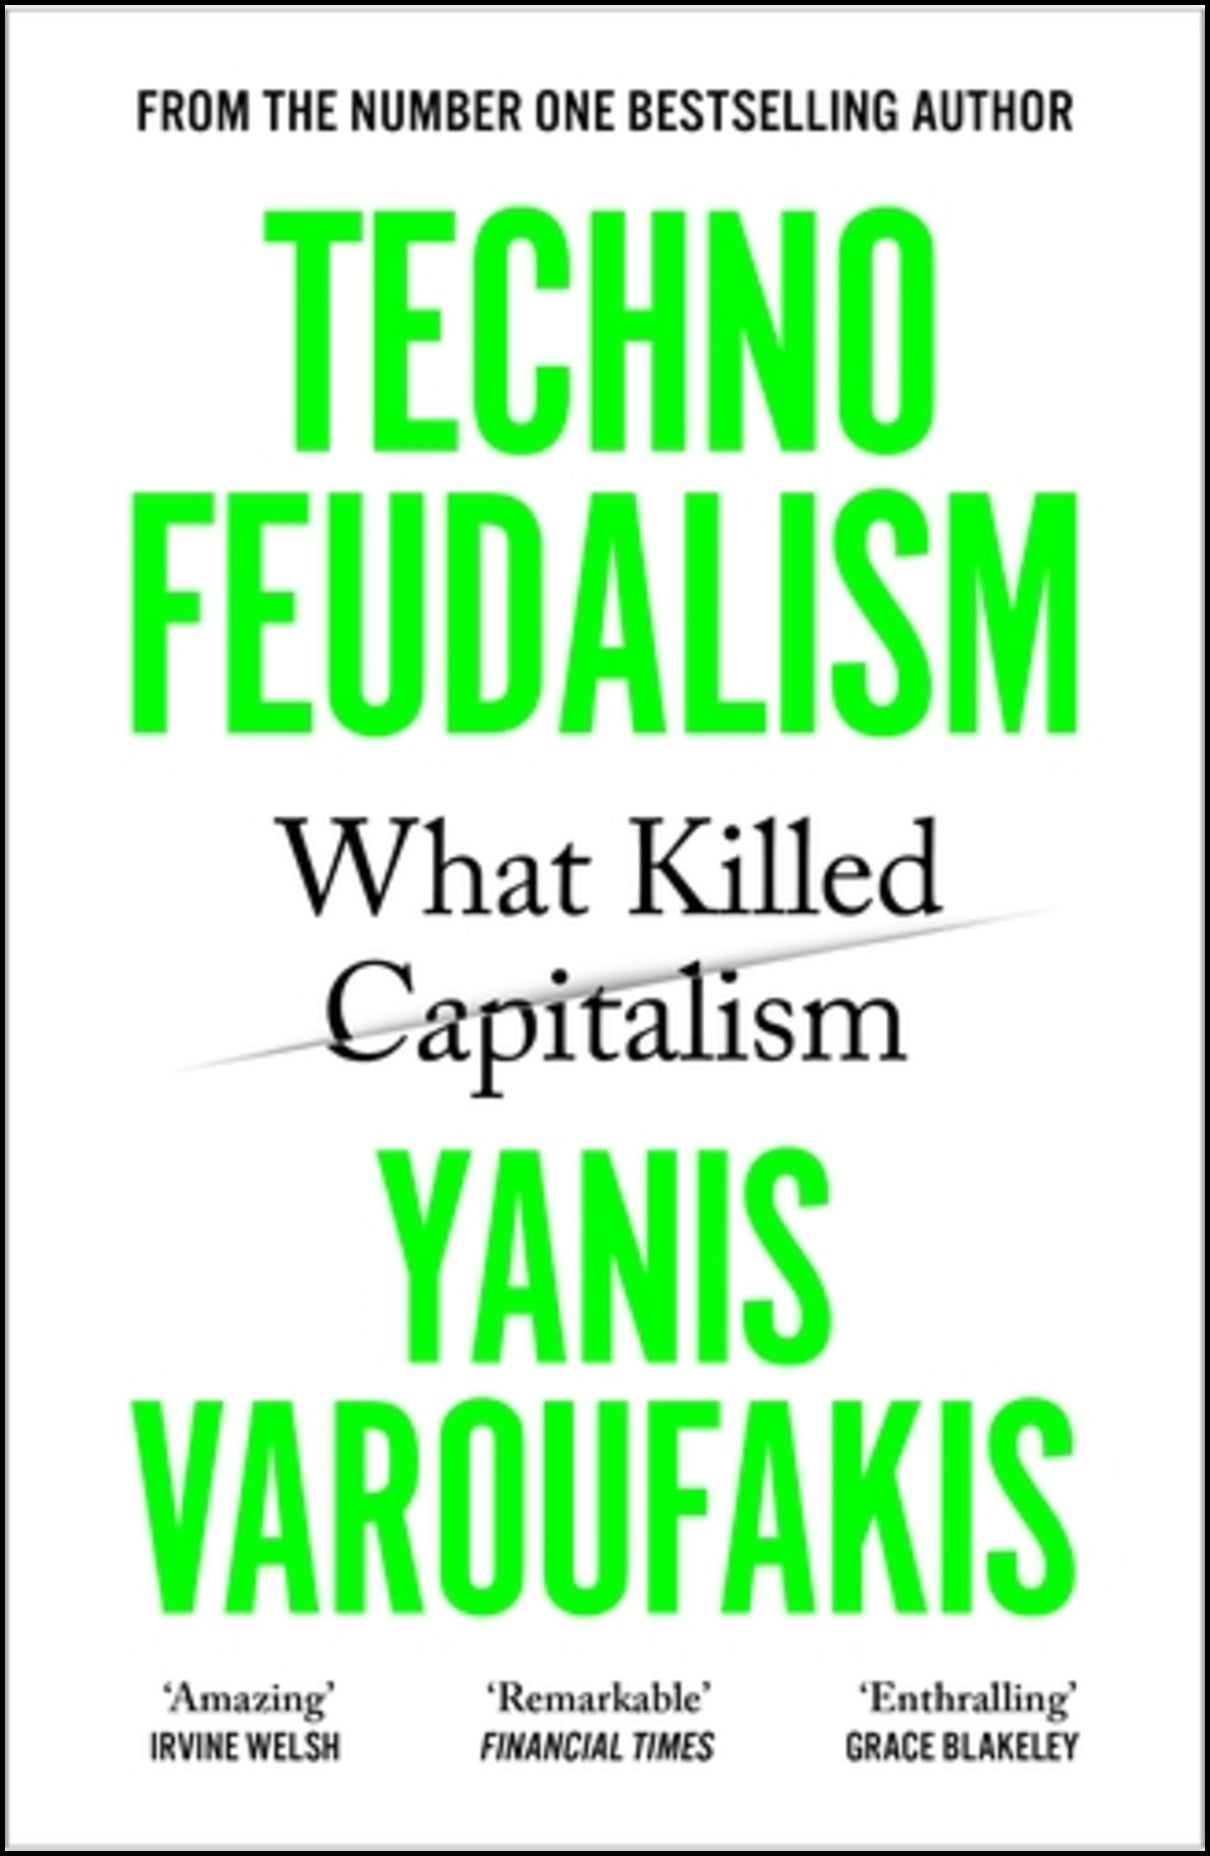 Varoufakis, Yanis | Technofeudalism